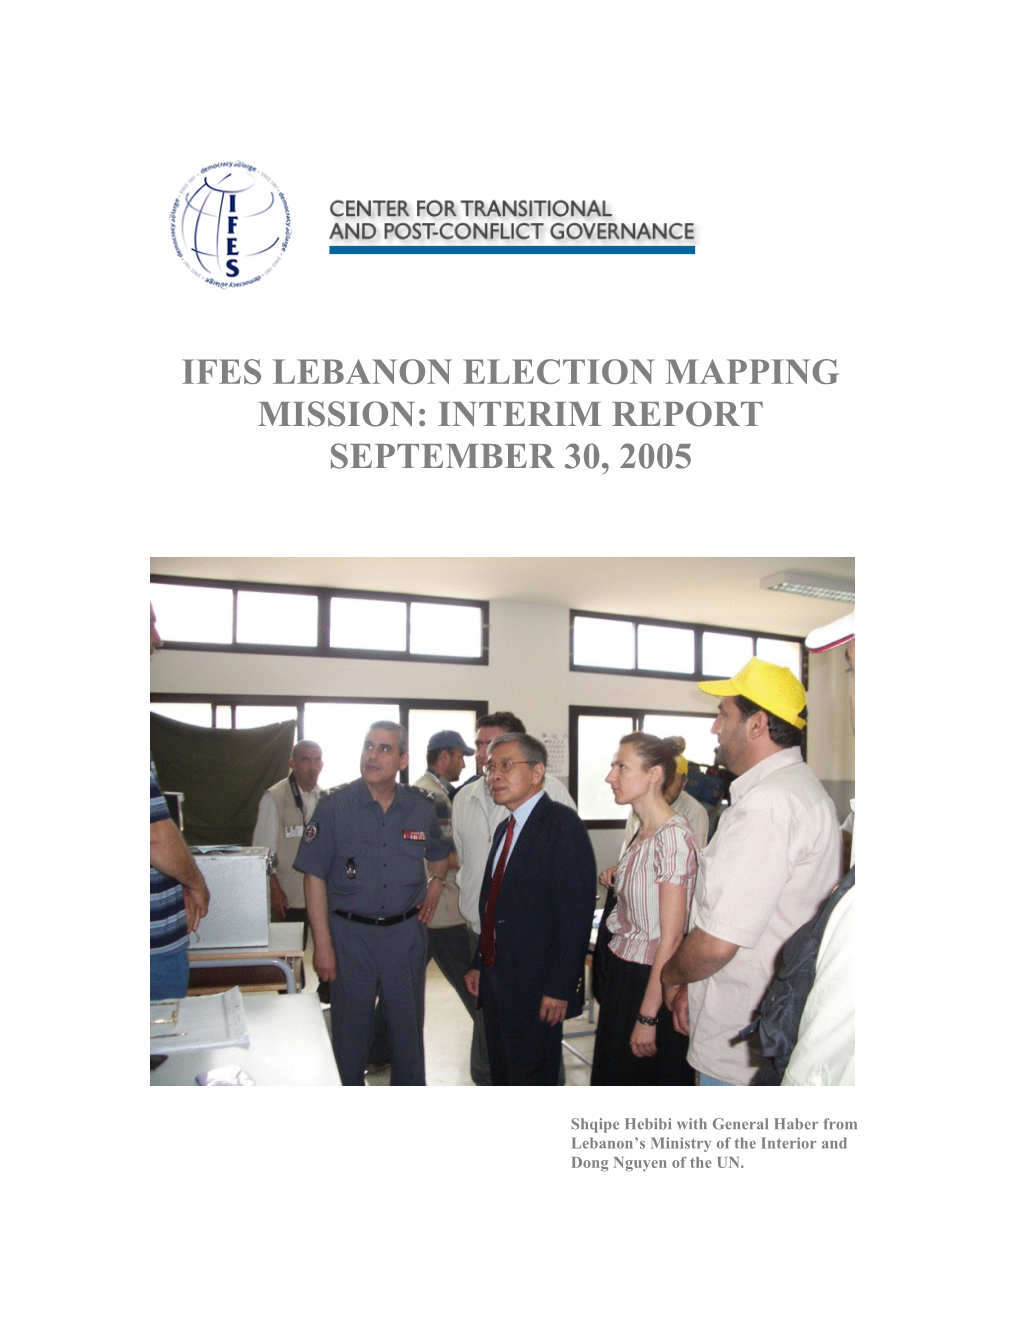 IFES Lebanon Electoral Assistance Program